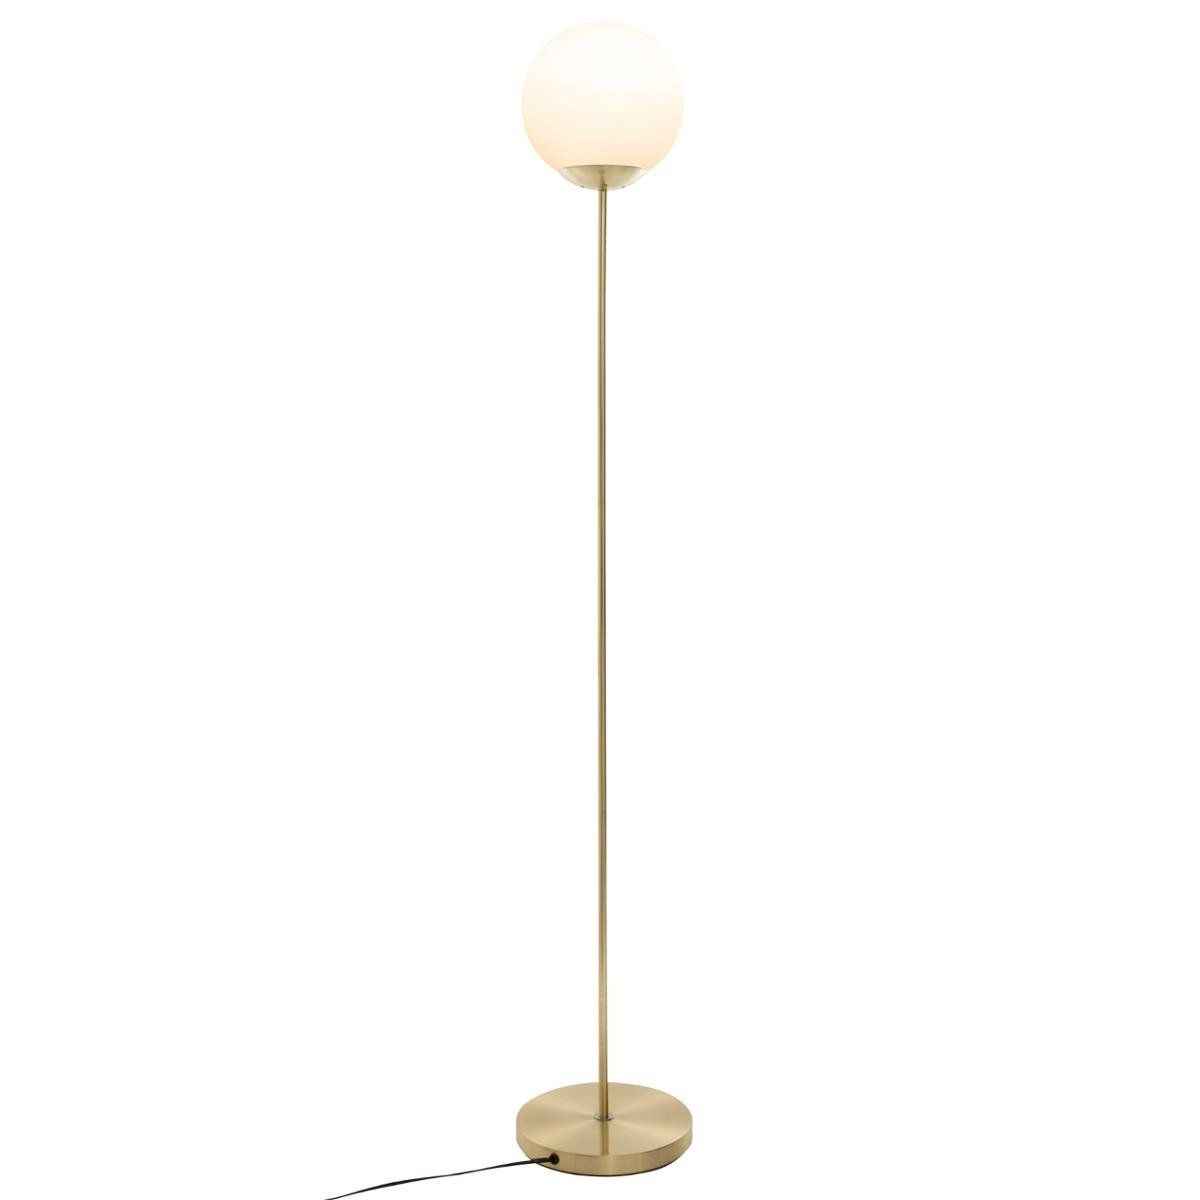 Atmosphera Stojací lampa s kulatým stínítkem, kov, zlato, 134 cm - EMAKO.CZ s.r.o.